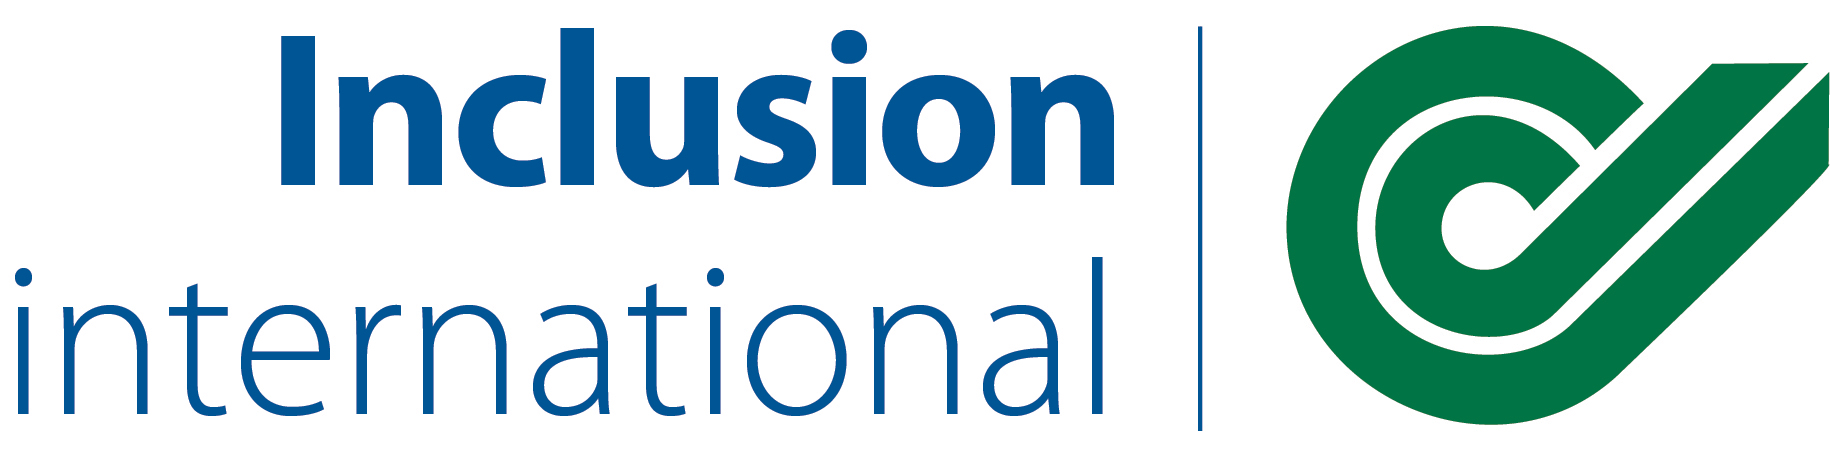 Inclusion International logo